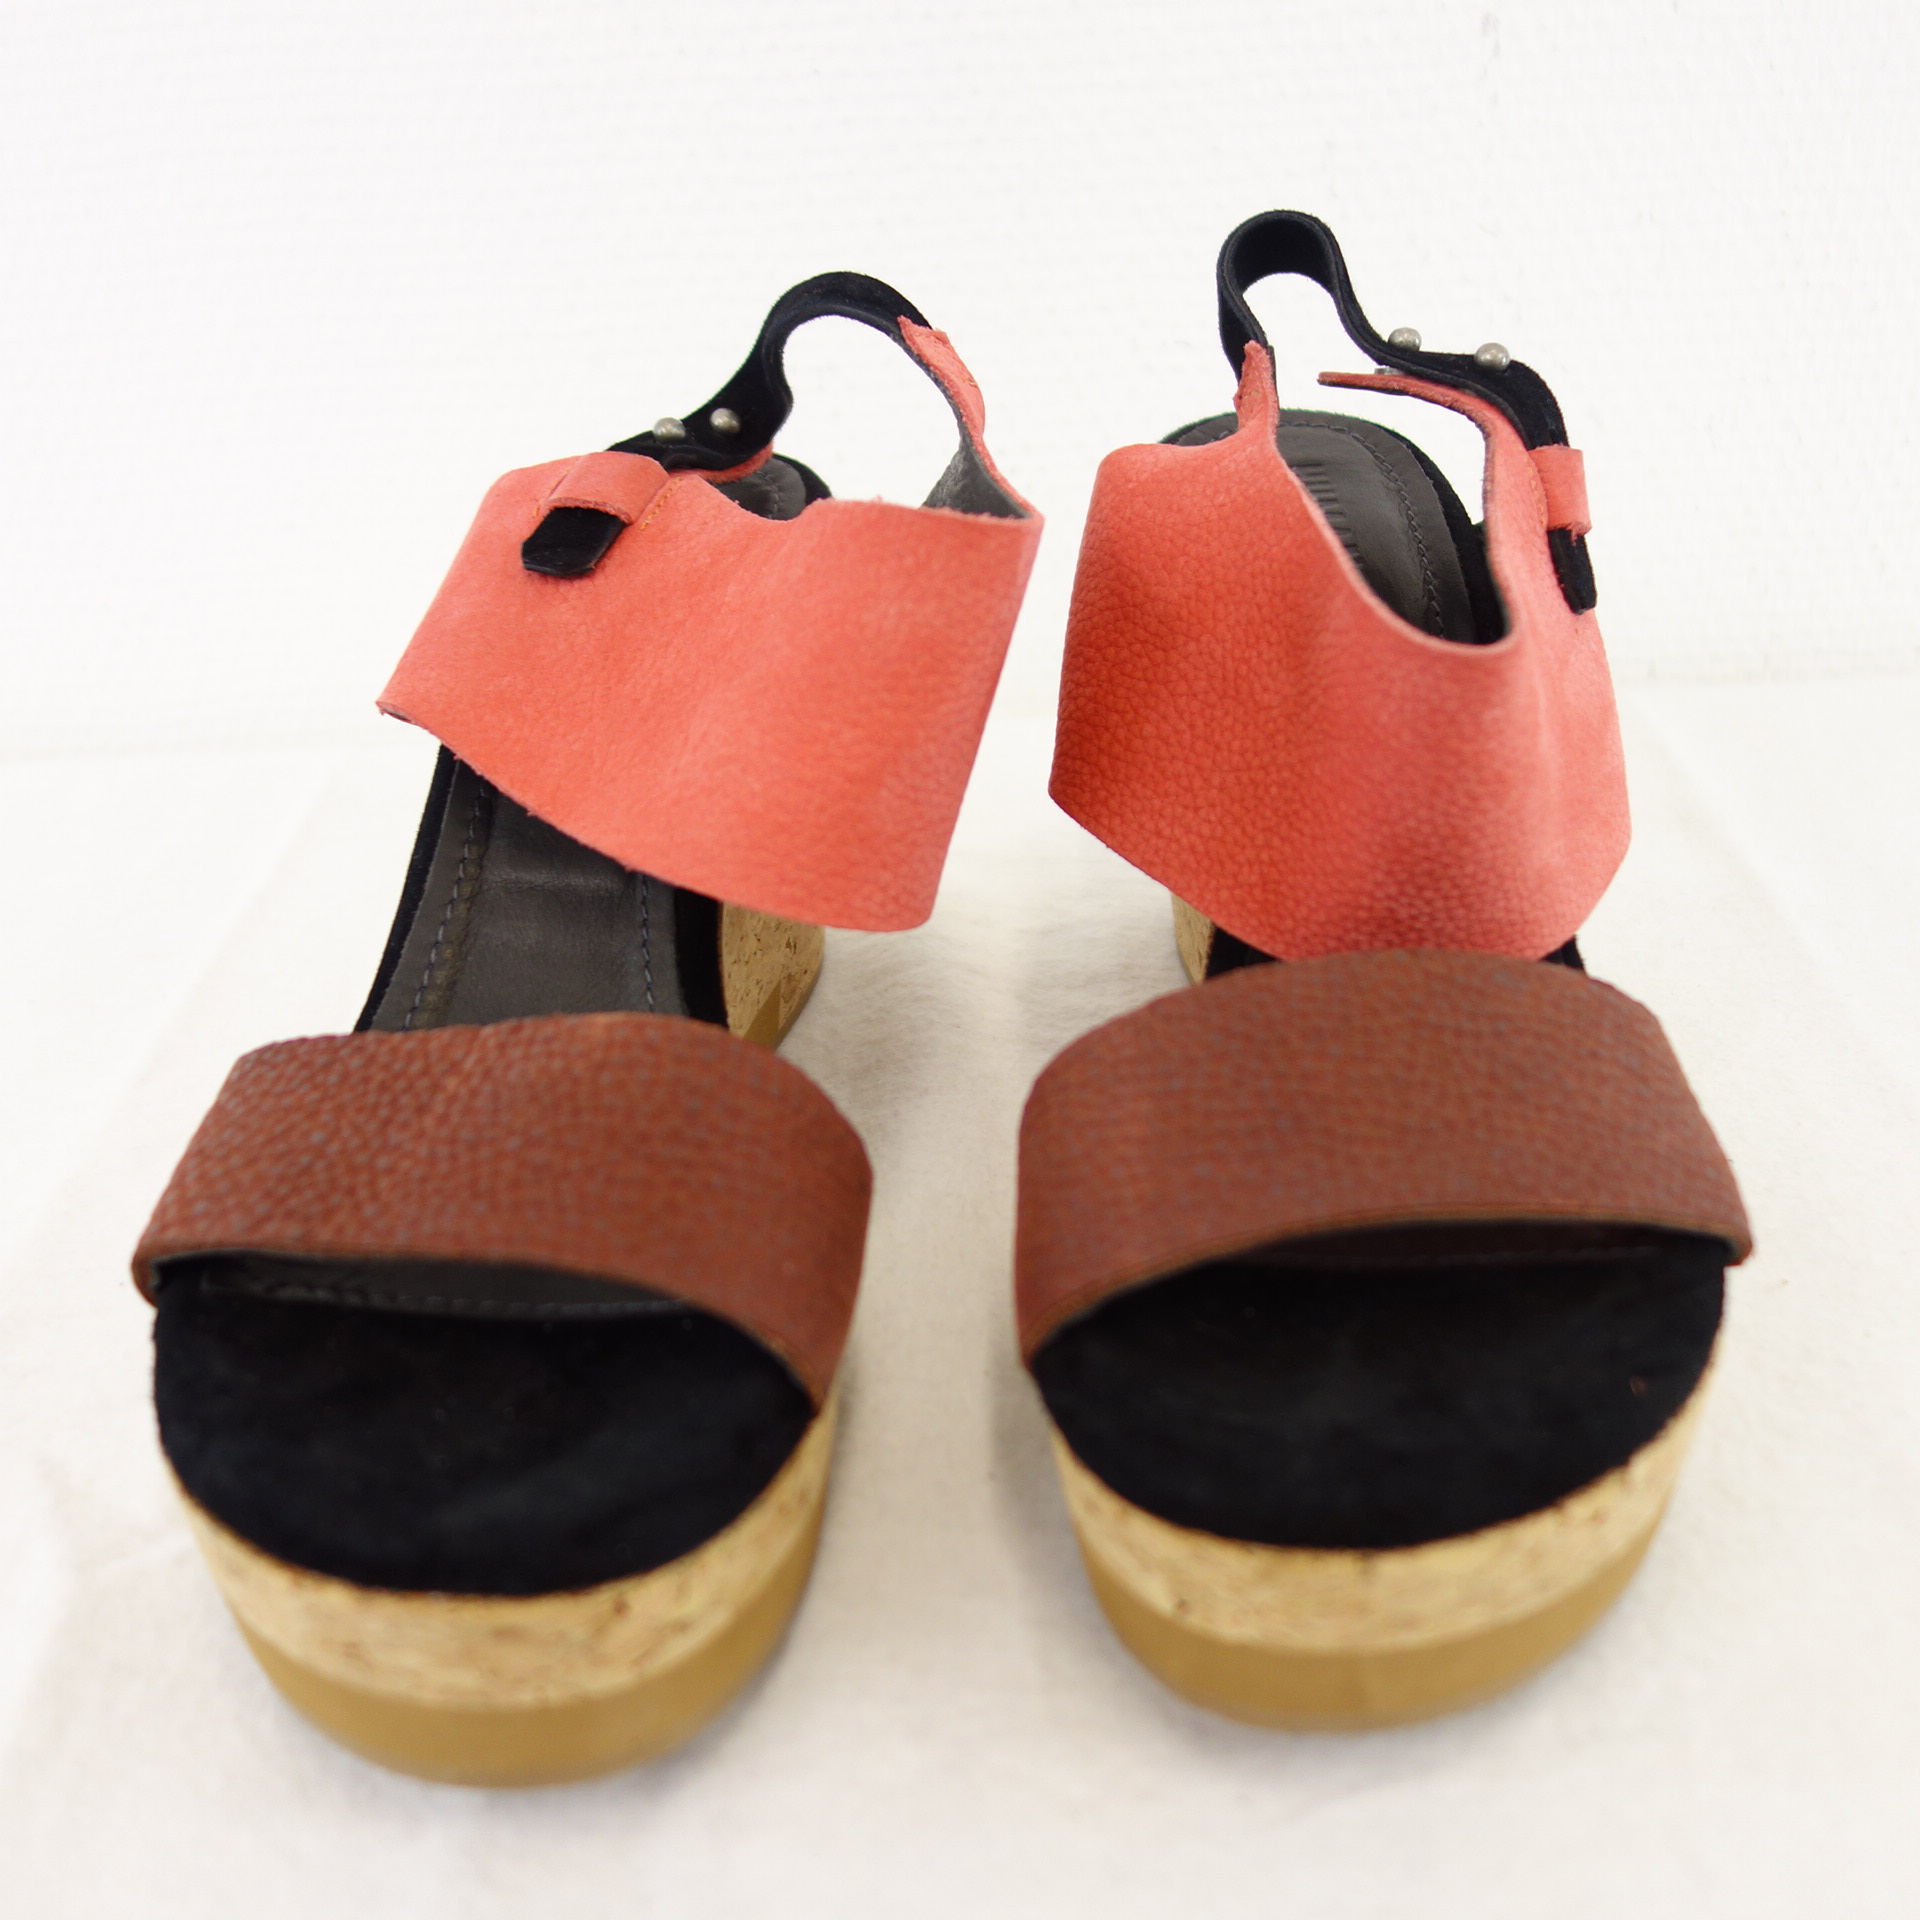 HUMANOID Damen Schuhe Sandaletten Wedges Pumps Leder Rot Braun Gr 40 ( 39 )